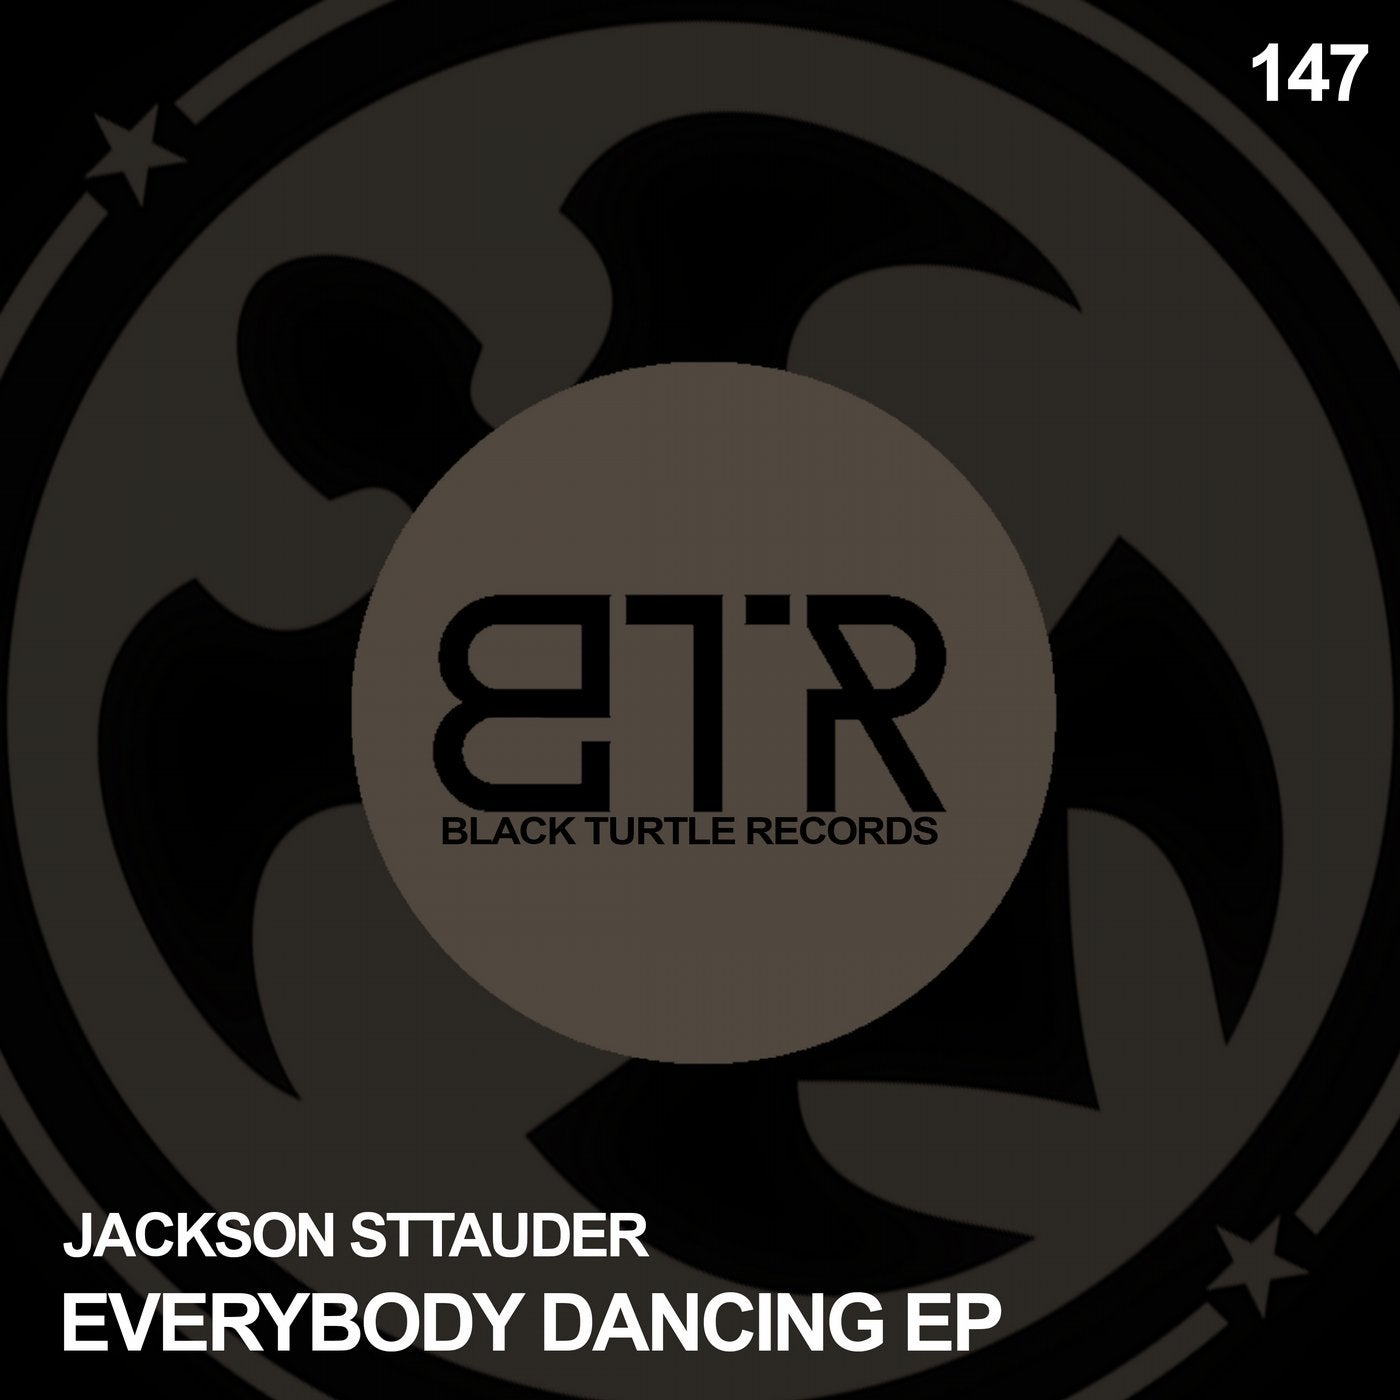 Everyboody Dancing EP